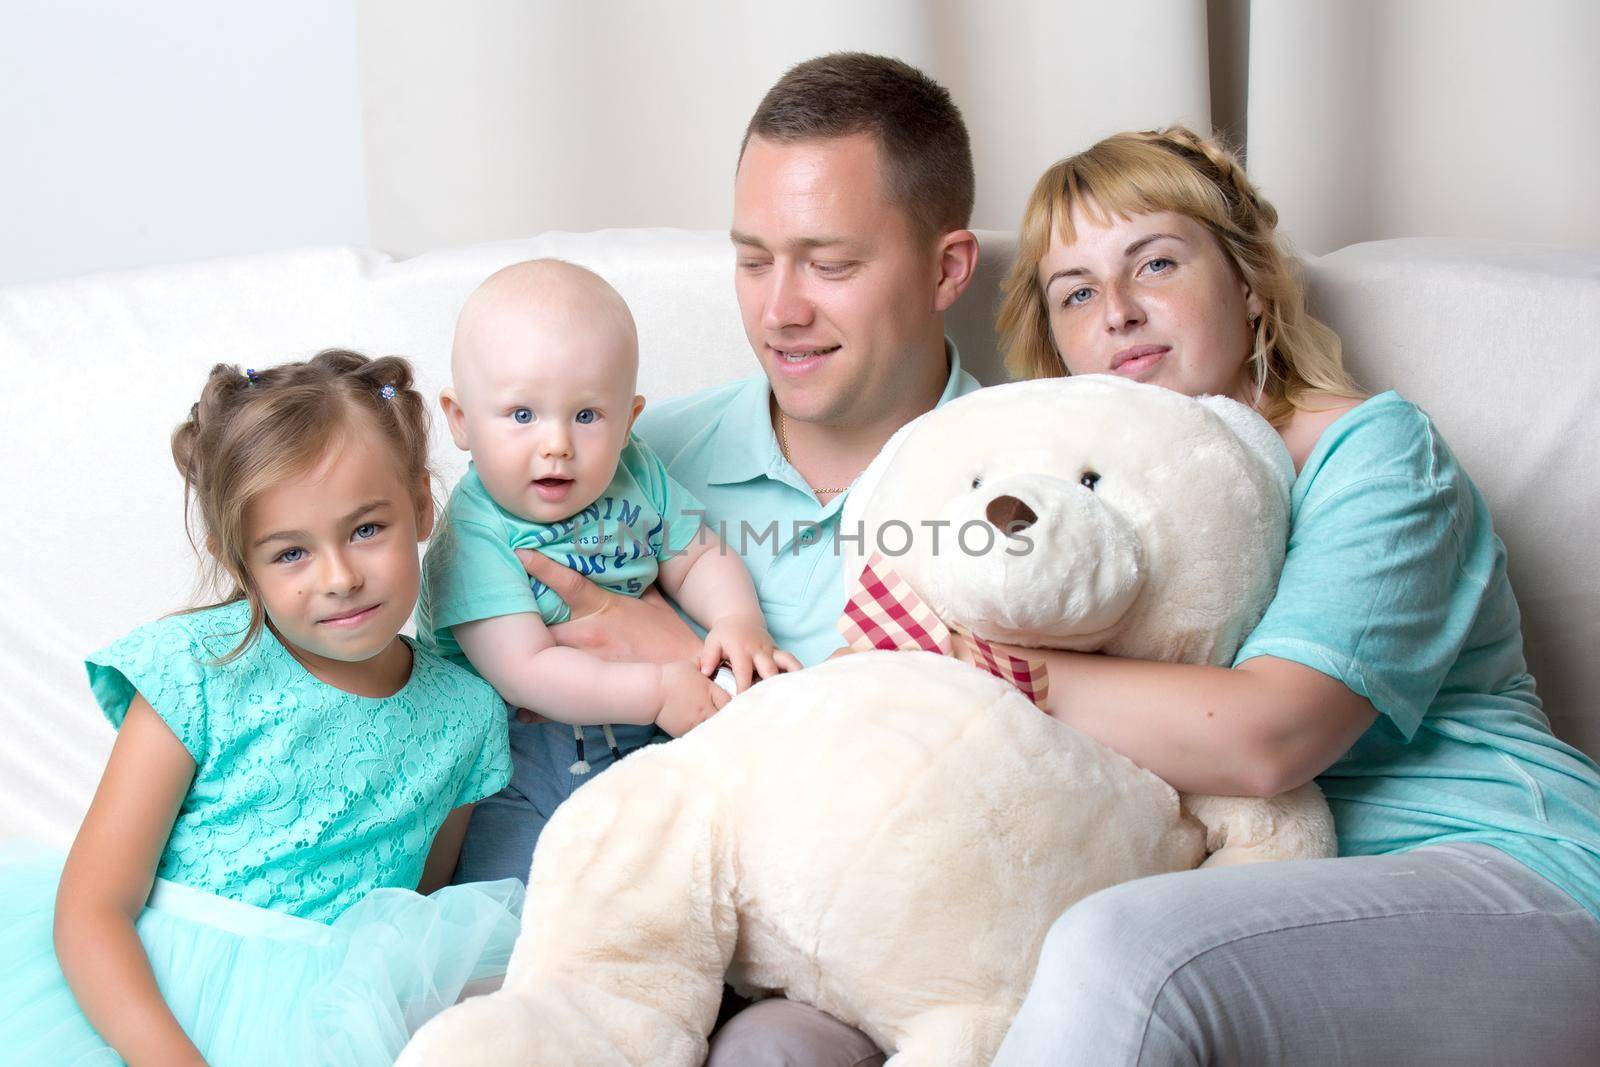 Happy family with young children by kolesnikov_studio